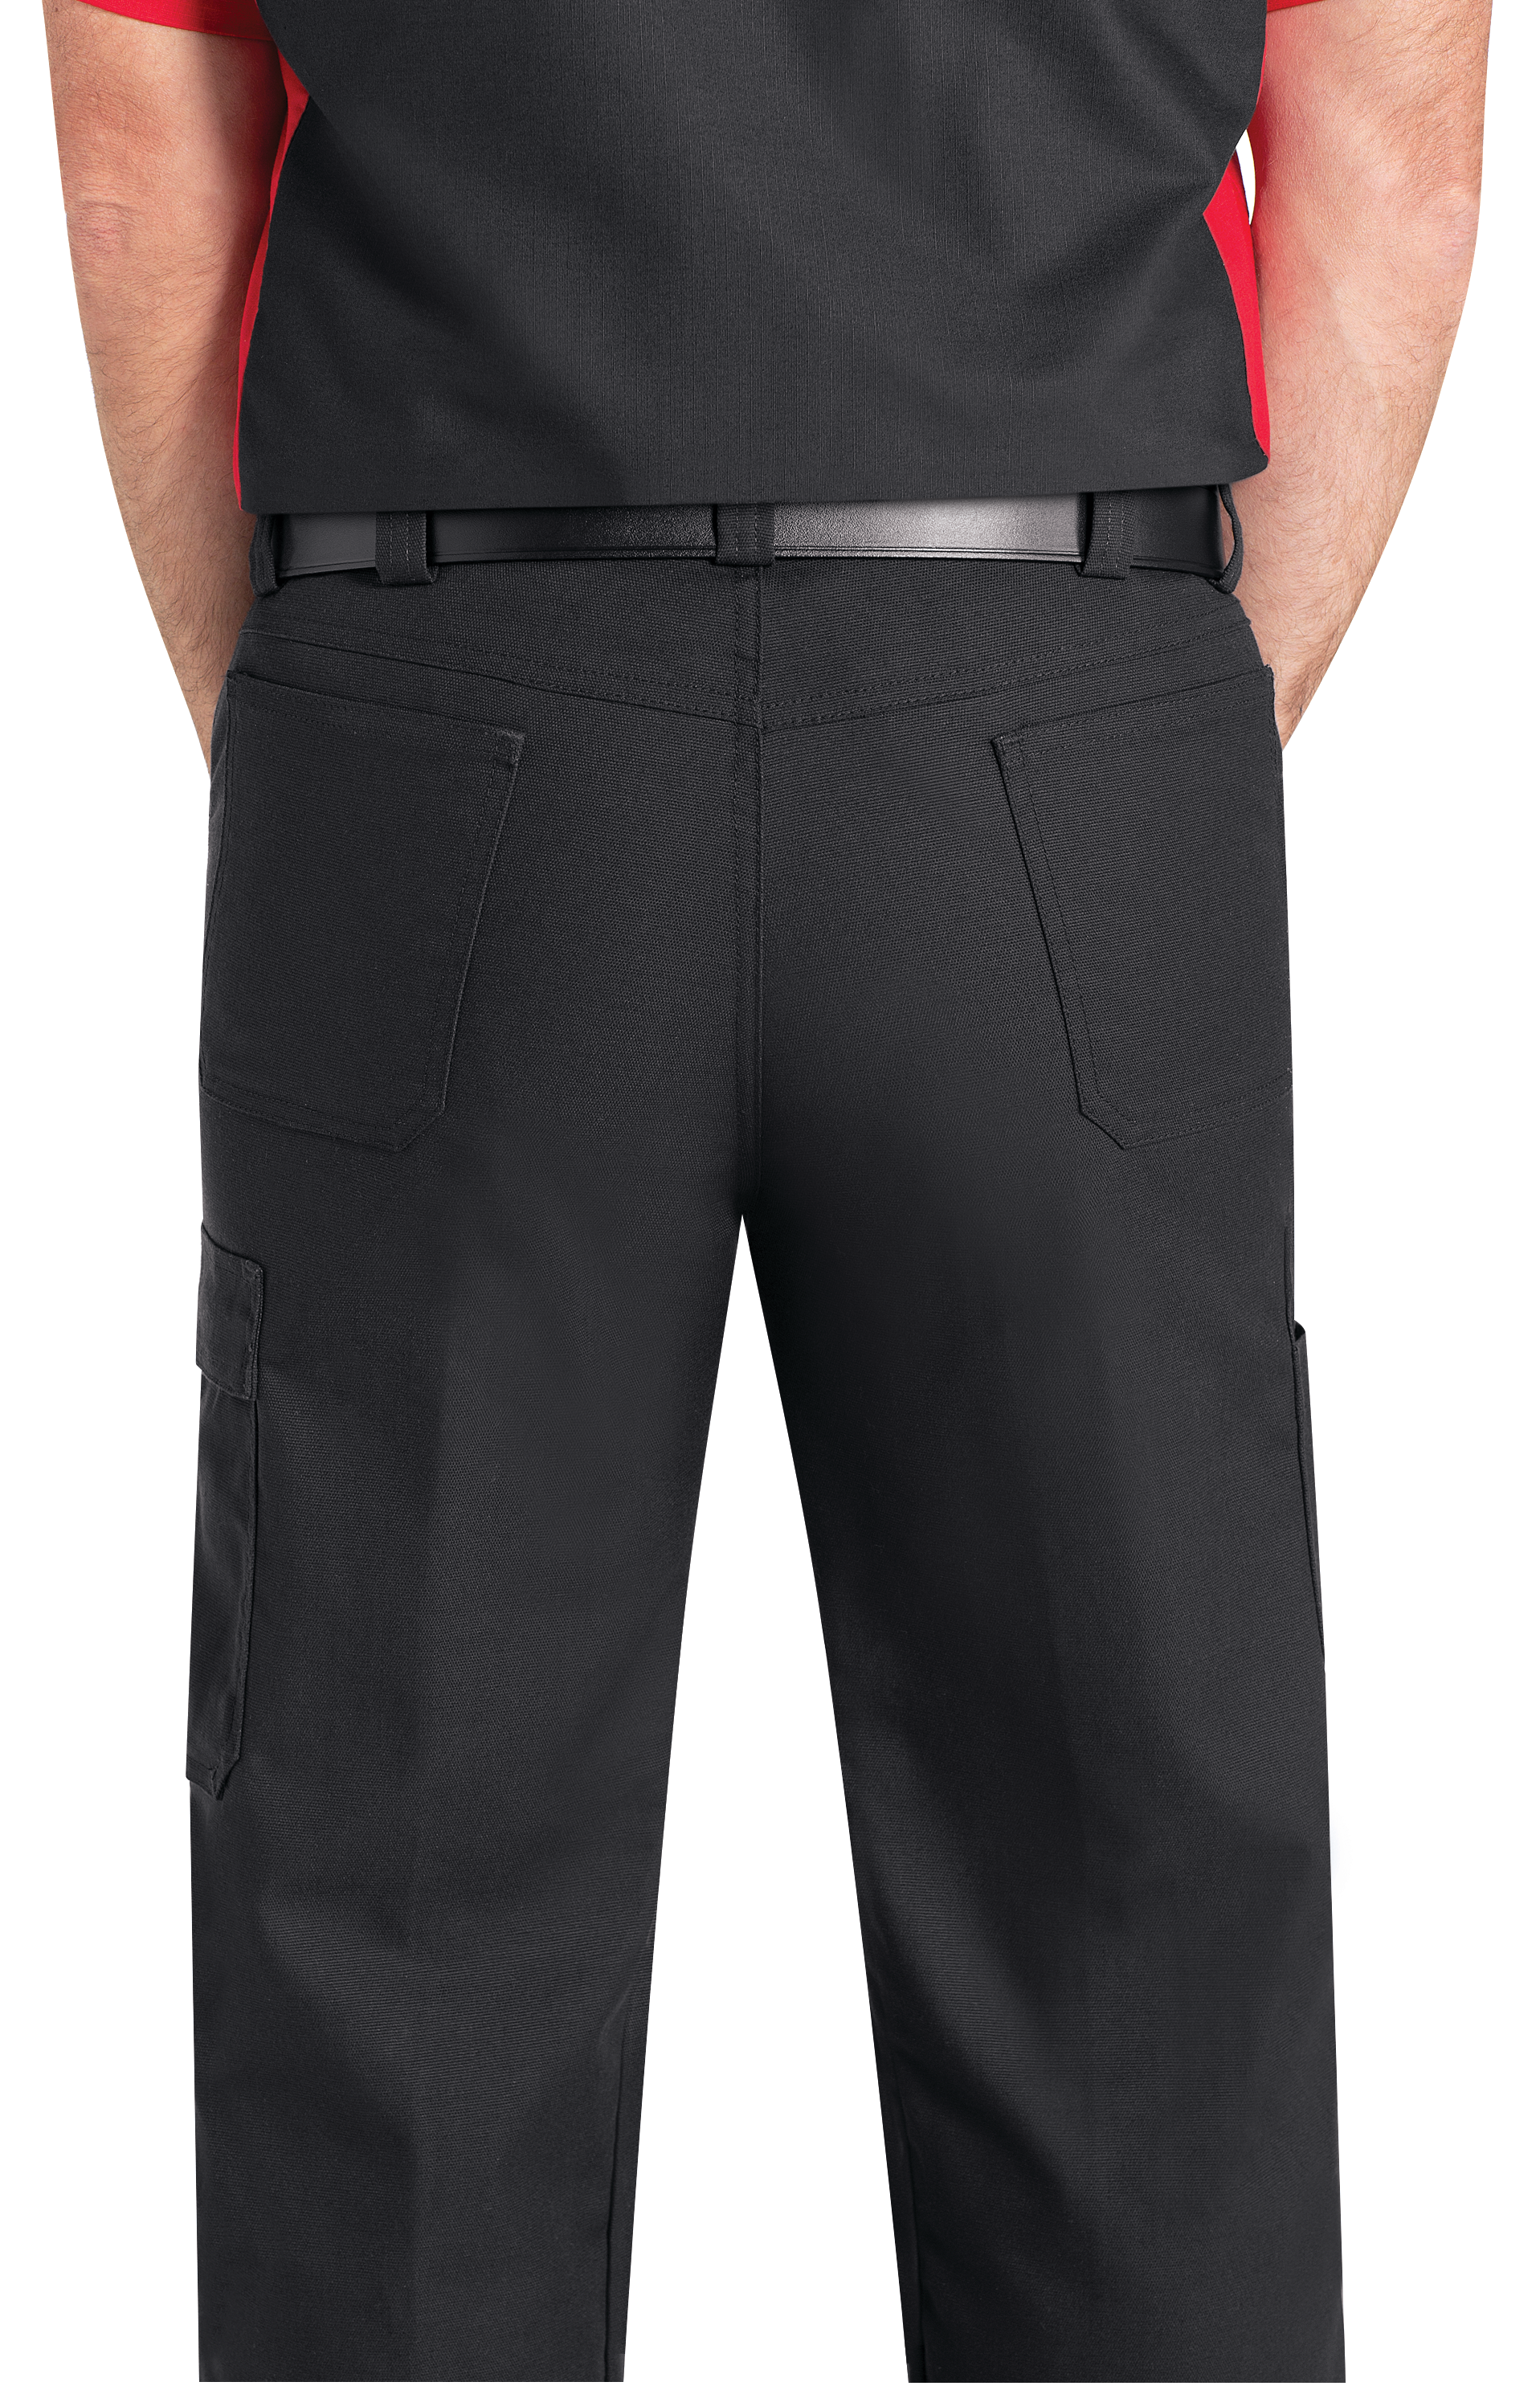 Red Kap Pants: Men's PT22 NV Navy Blue Low Rise Work Pants